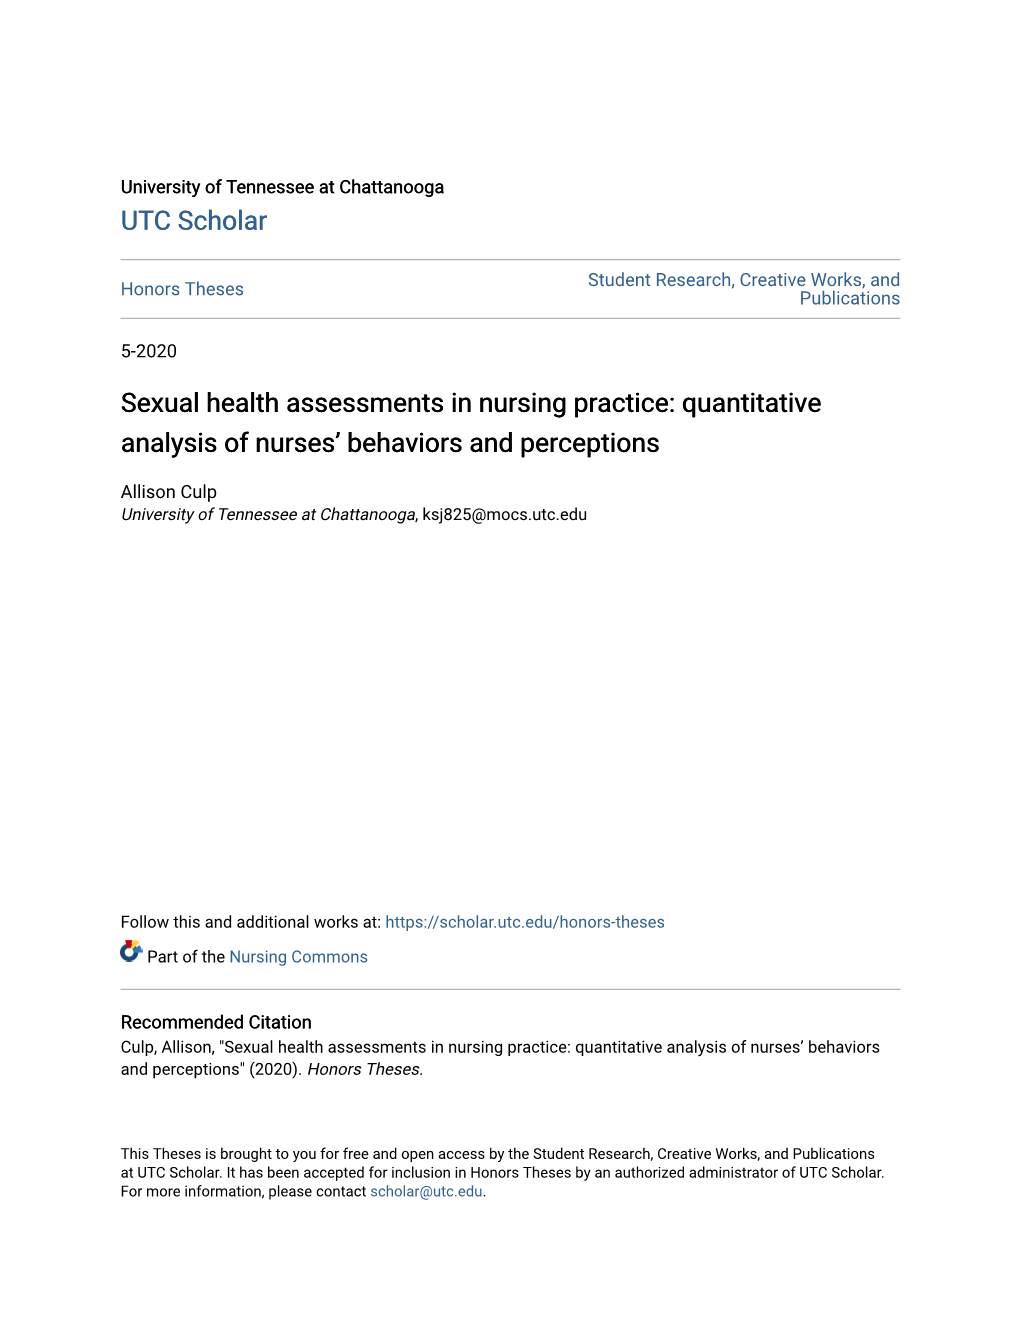 Sexual Health Assessments in Nursing Practice: Quantitative Analysis of Nurses’ Behaviors and Perceptions